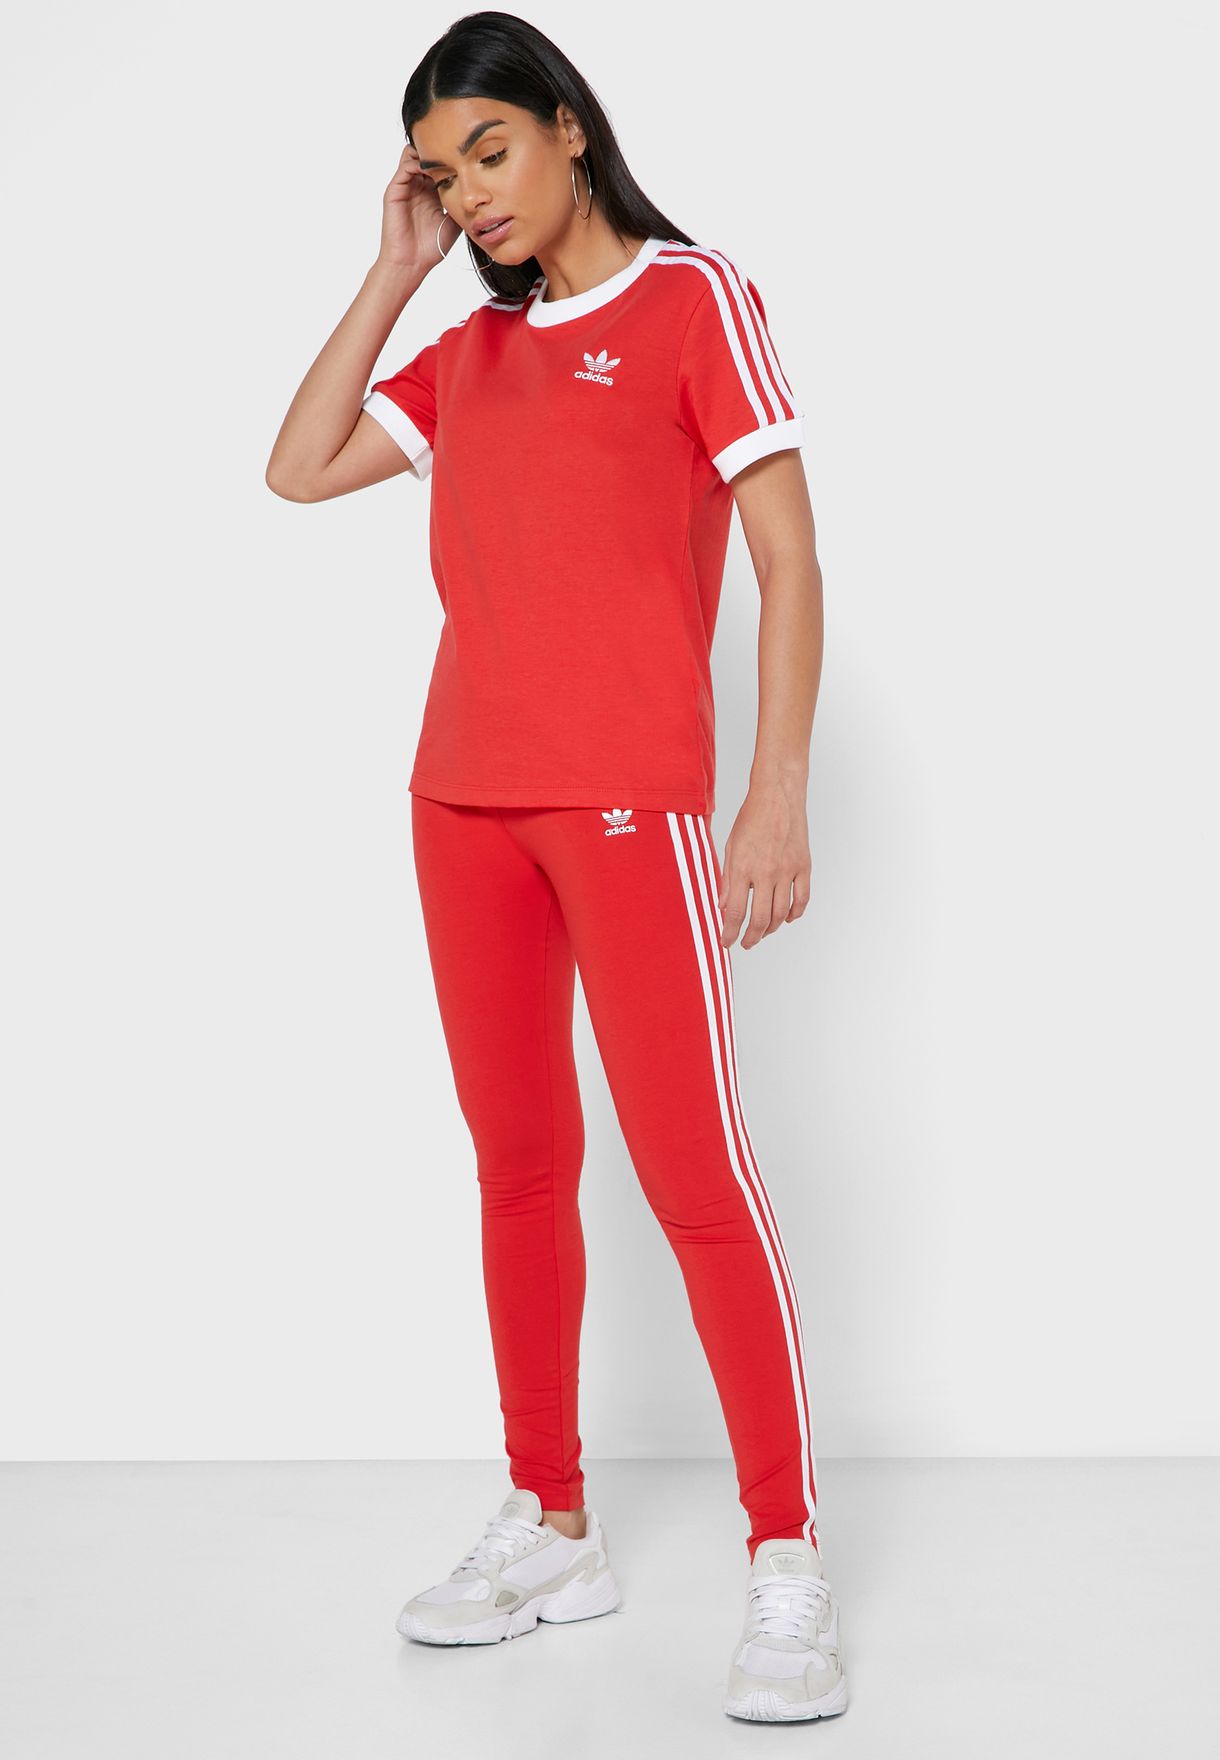 red adidas leggings